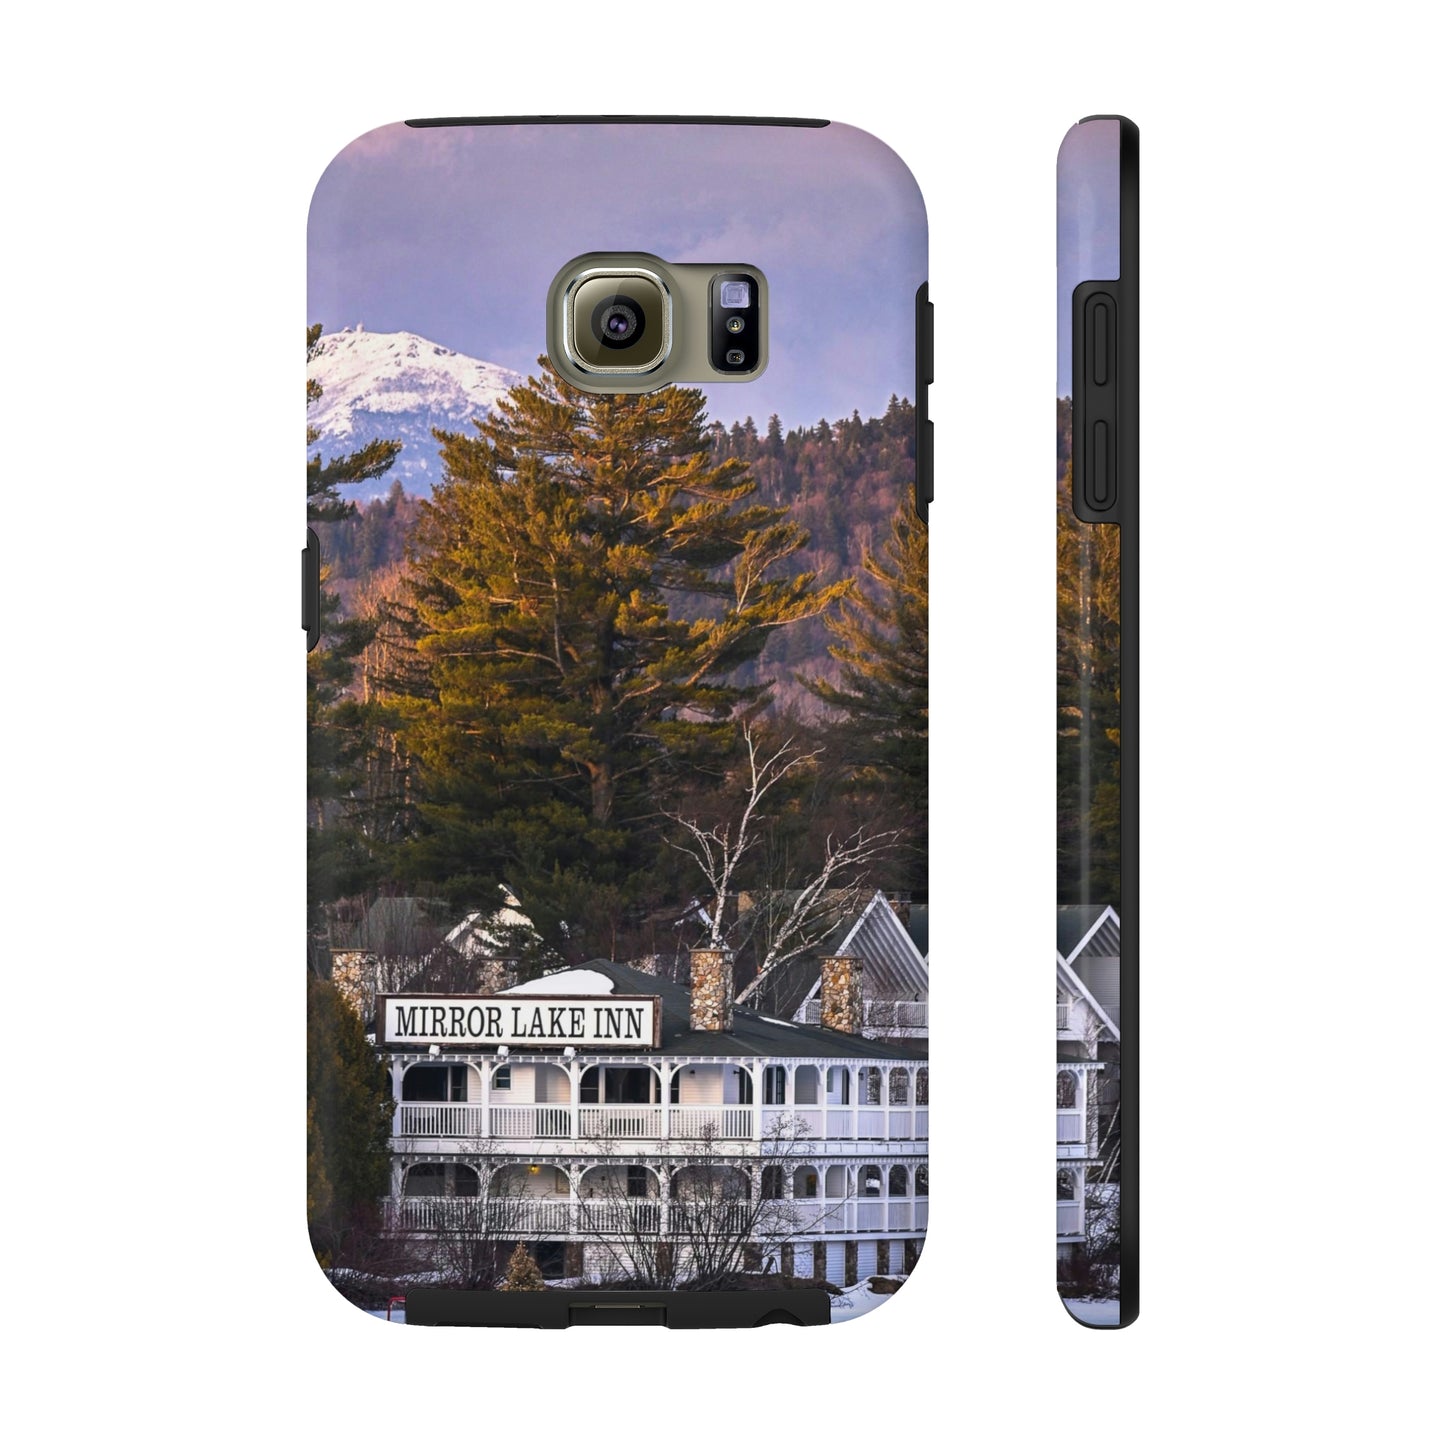 Impact Resistant Phone Case - Mirror lake Inn